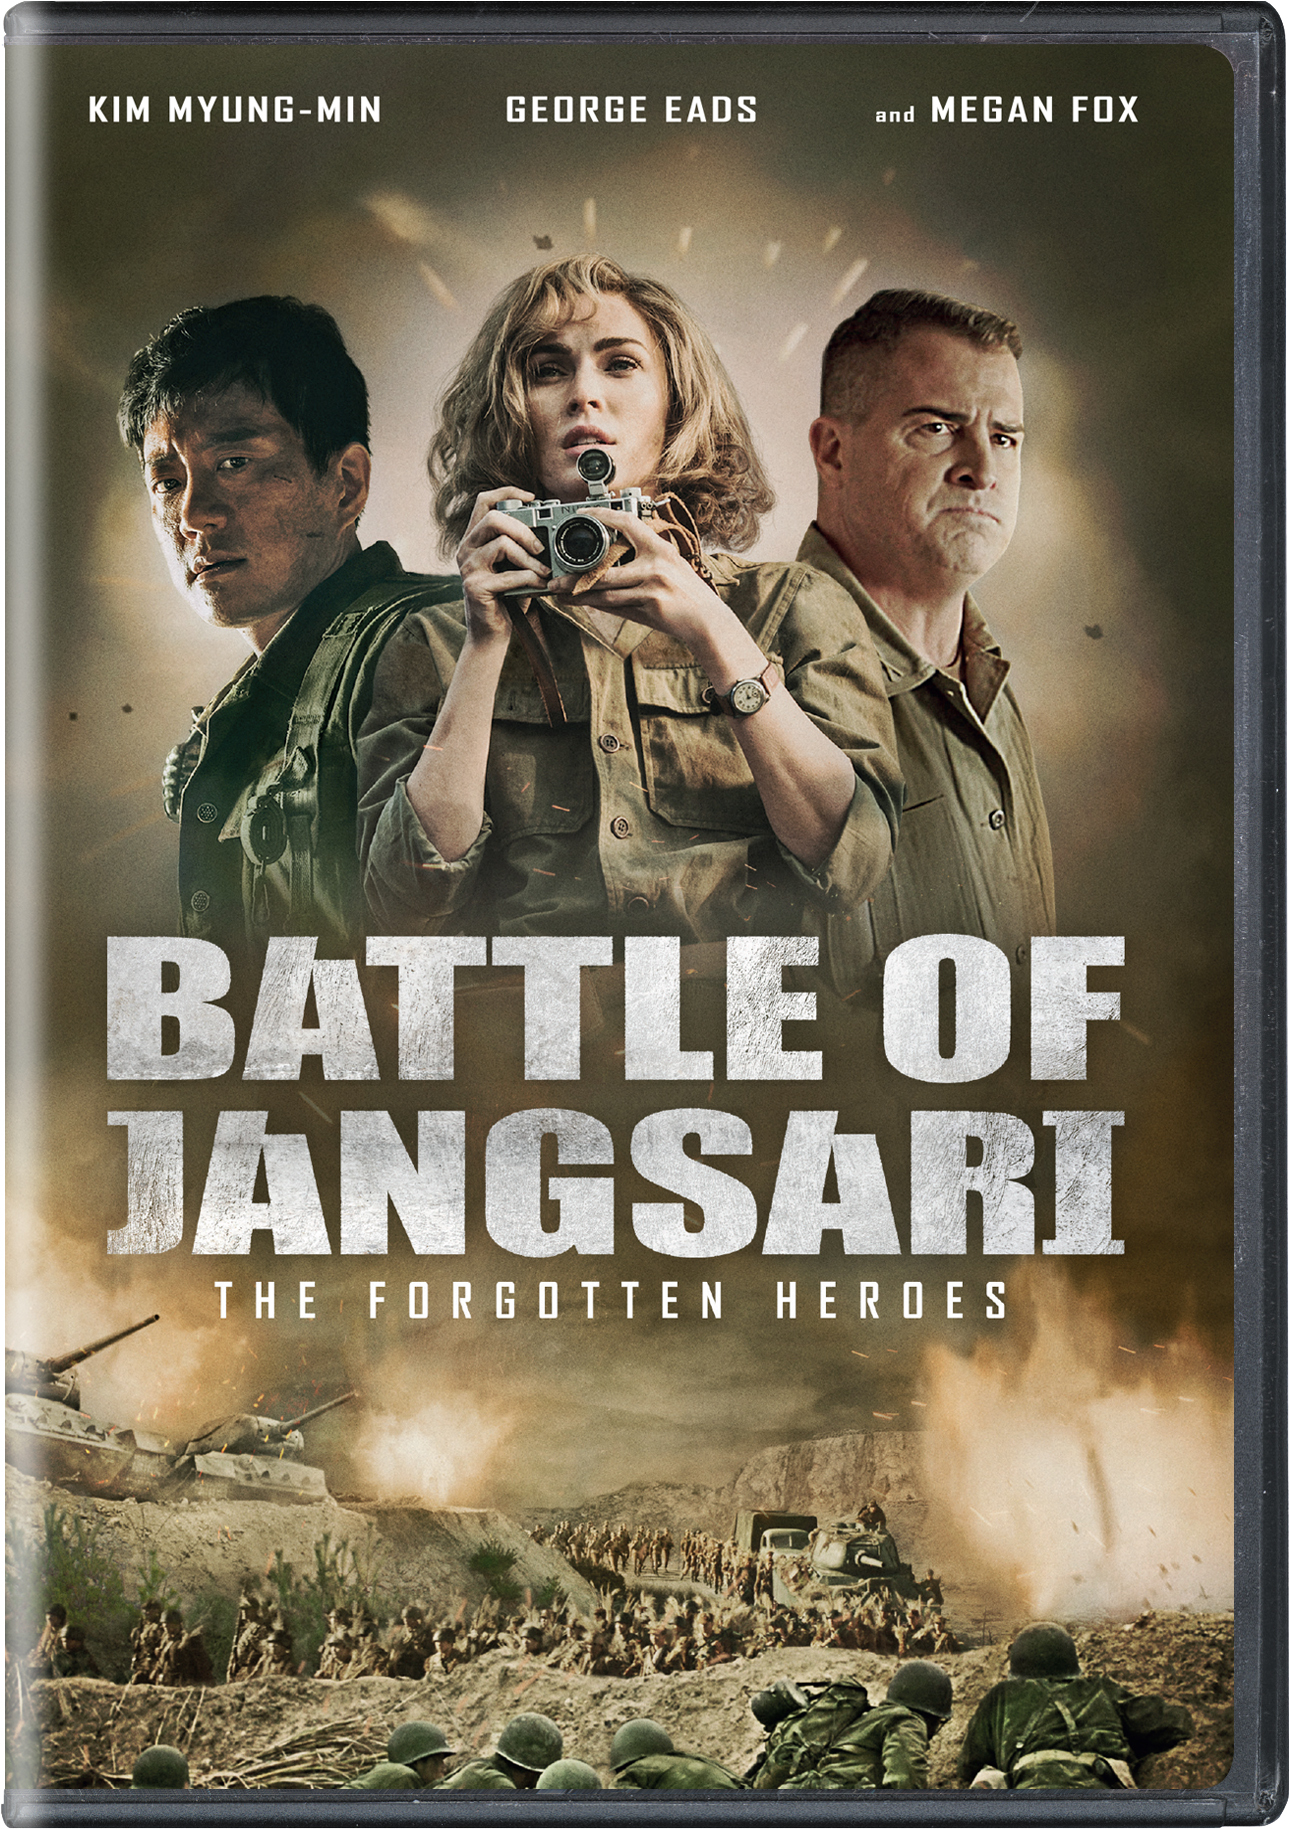 The Battle Of Jangsari - DVD [ 2019 ]  - Action Movies On DVD - Movies On GRUV